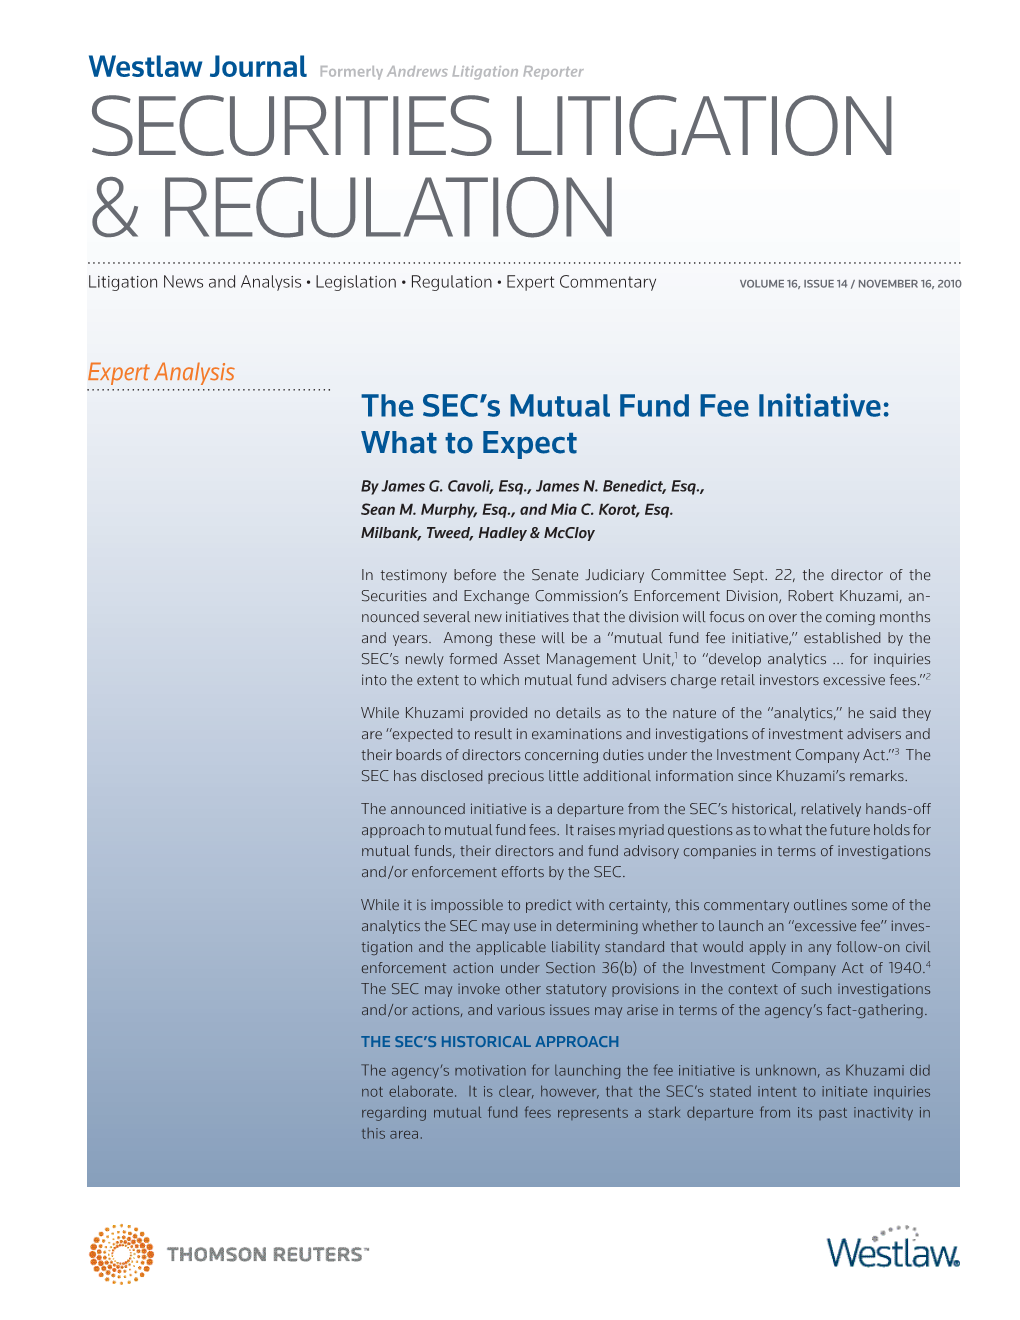 Securities Litigation & Regulation